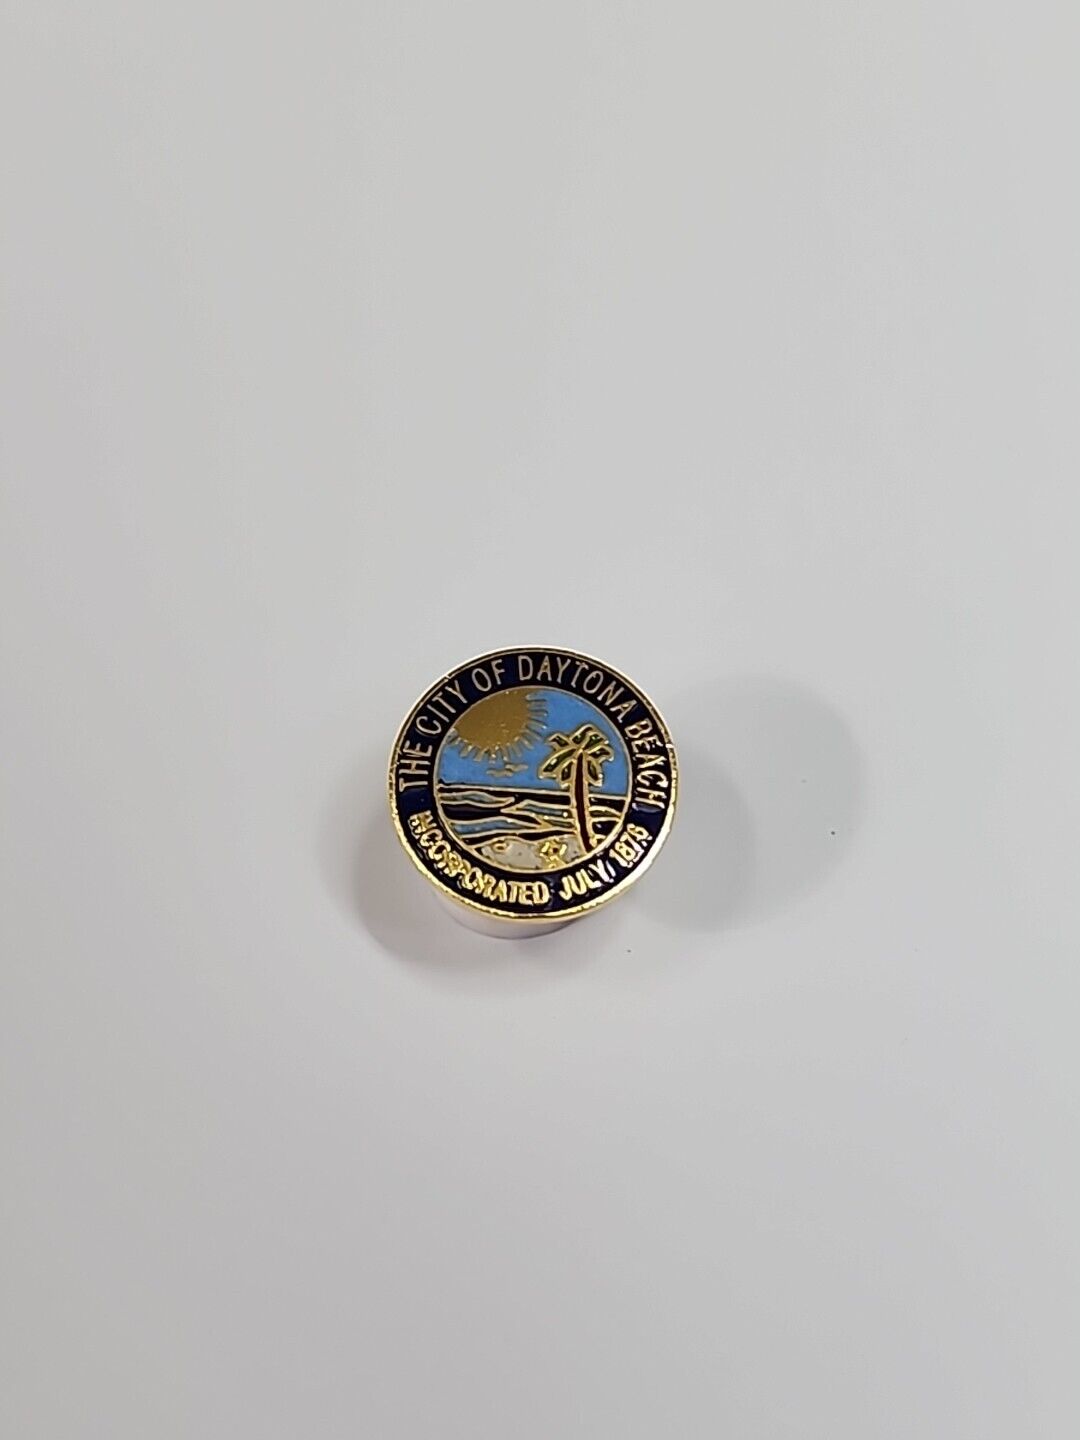 The City Of Daytona Beach Incorporated July 1876 Lapel Pin Very Small Size 